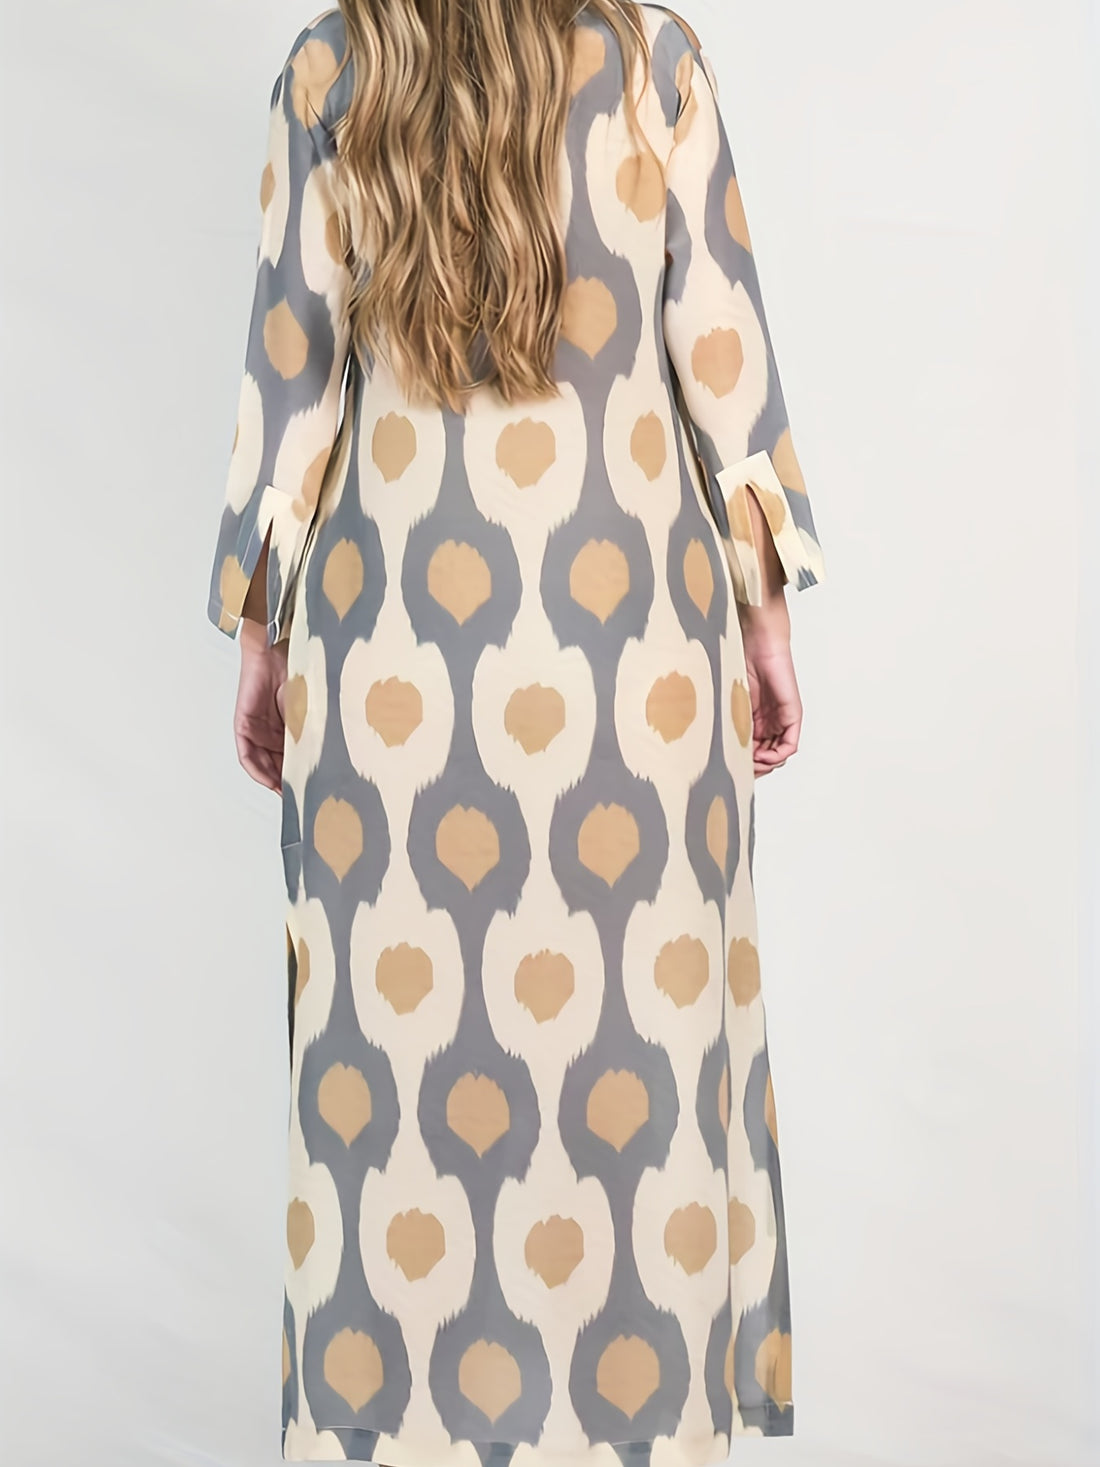 Graphic Print Split Dress, Vintage V Neck Long Sleeve Maxi Dress